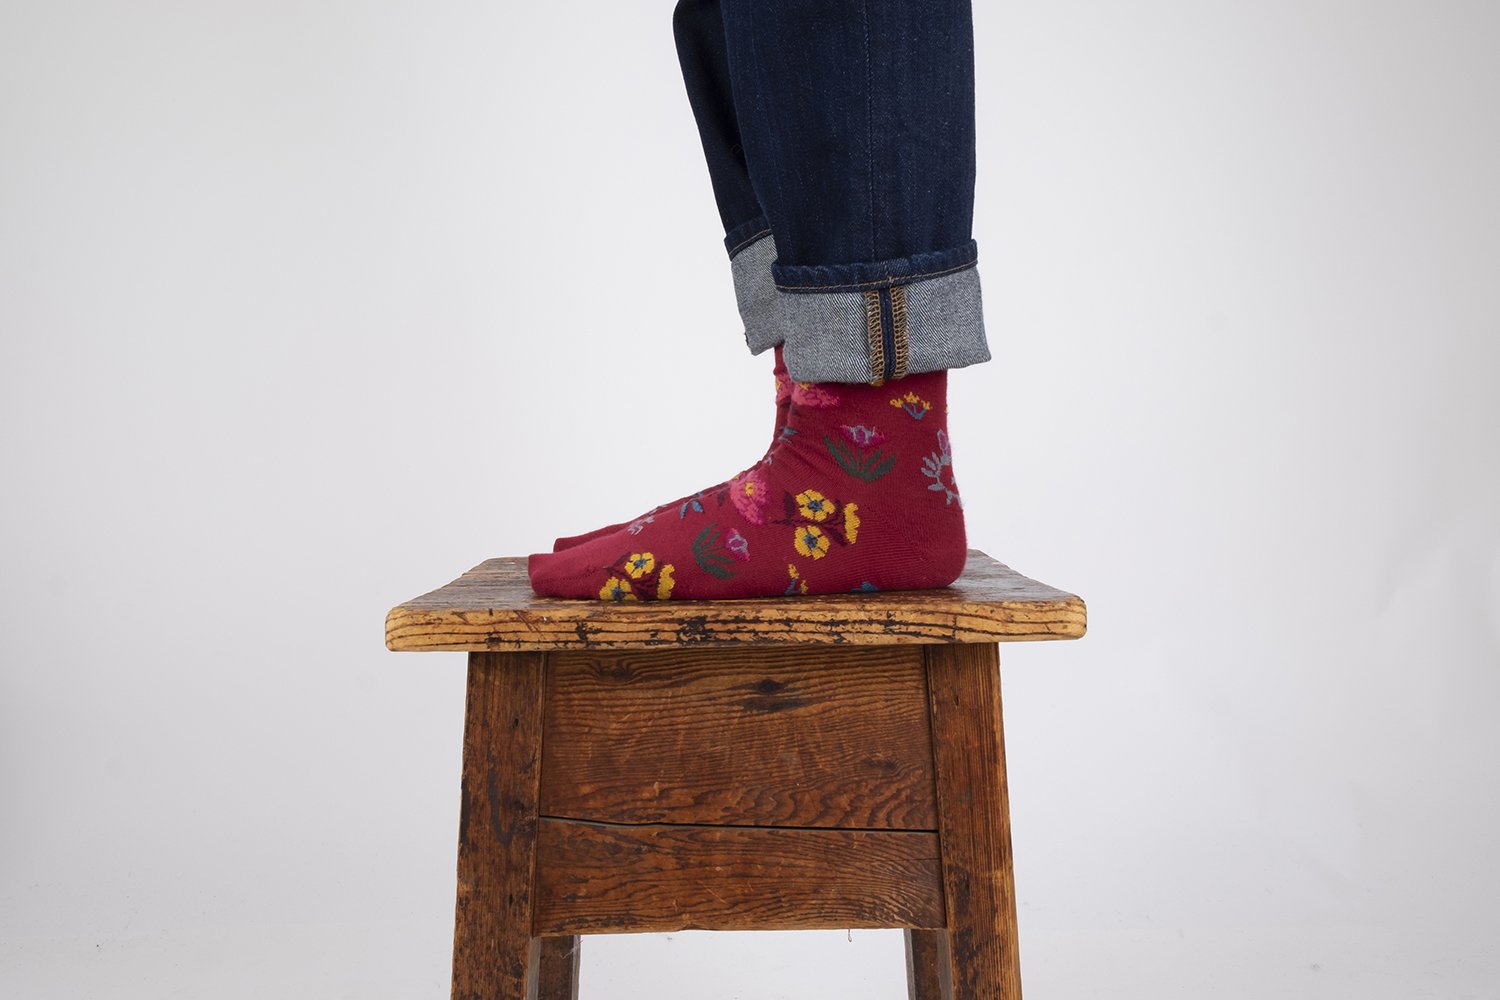 Skull & Crossbones luxury 100% cotton boot sock in redMade in Wales by Corgi 